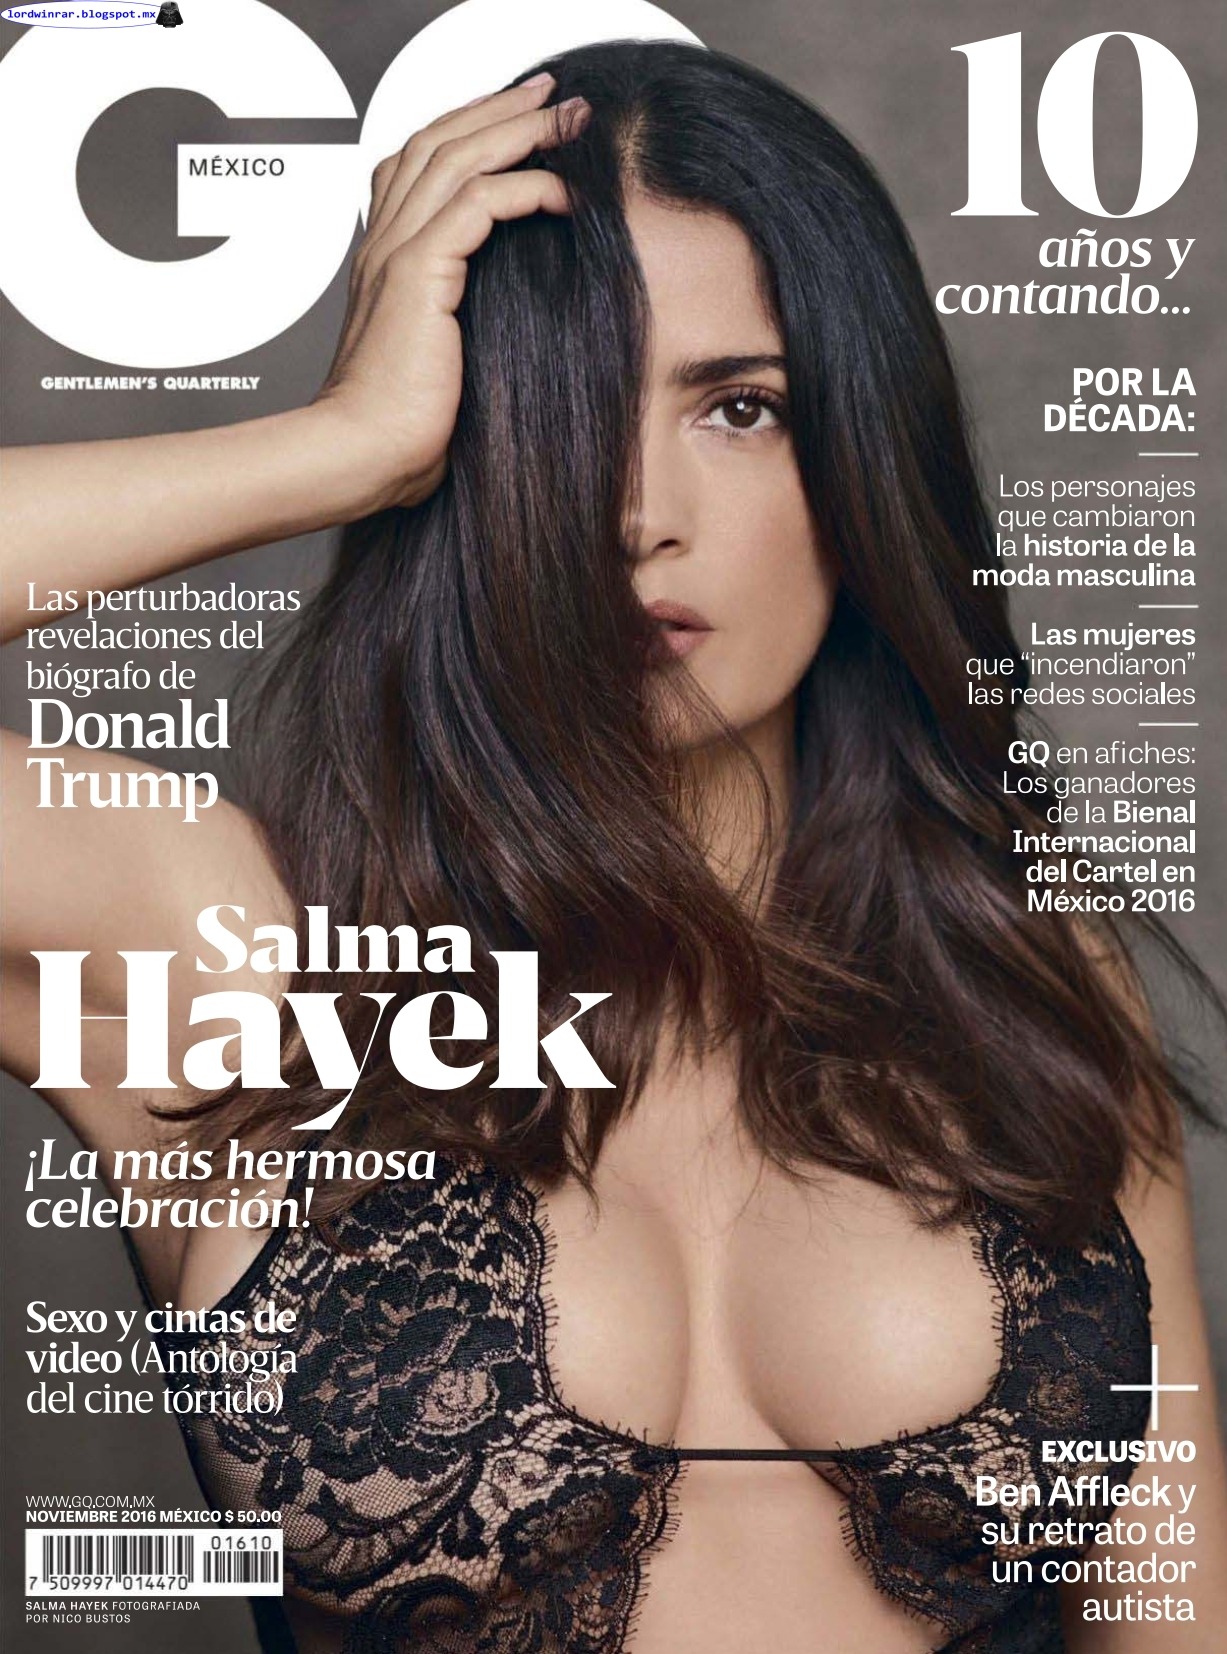   Salma Hayek - GQ Mexico 2016 Noviembre (27 Fotos HQ)Salma Hayek semi desnuda en